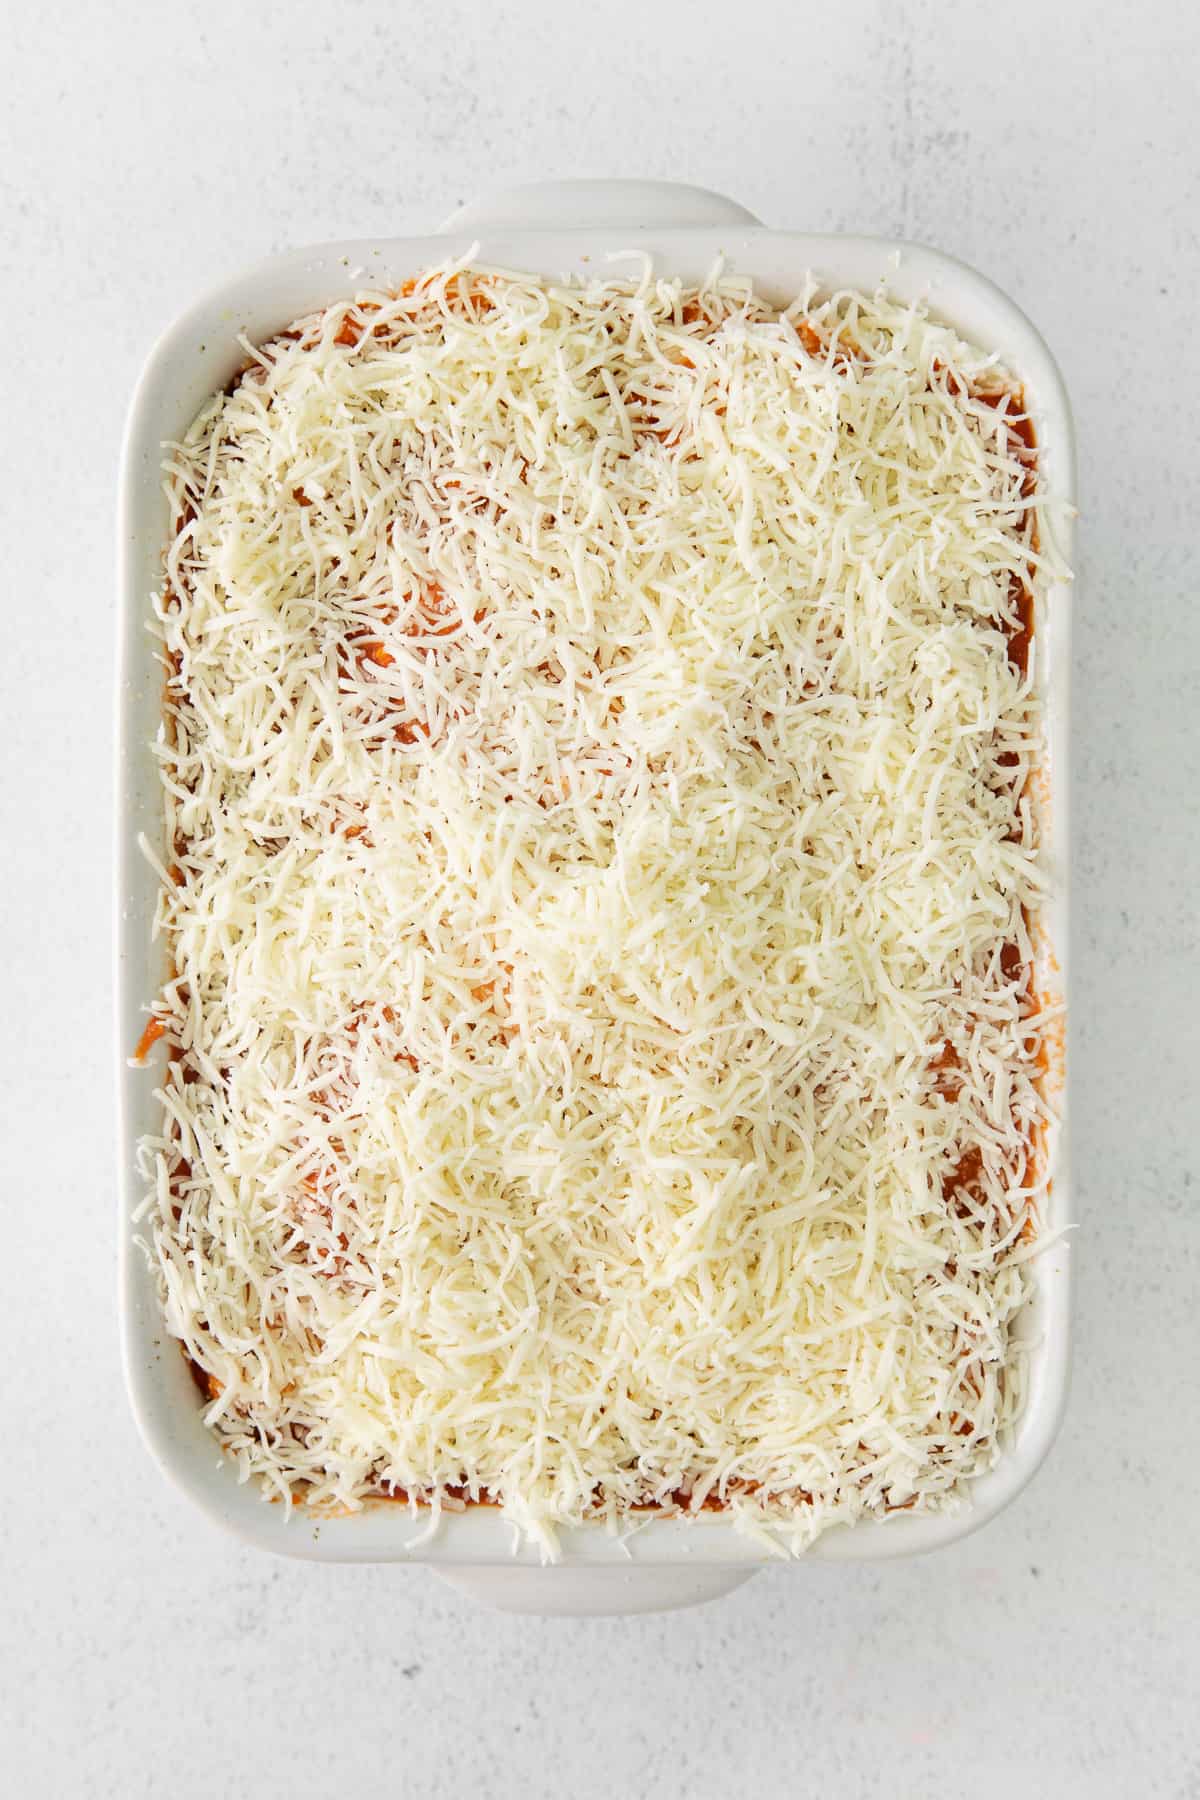 Ravioli lasagna covered in shredded mozzarella cheese.